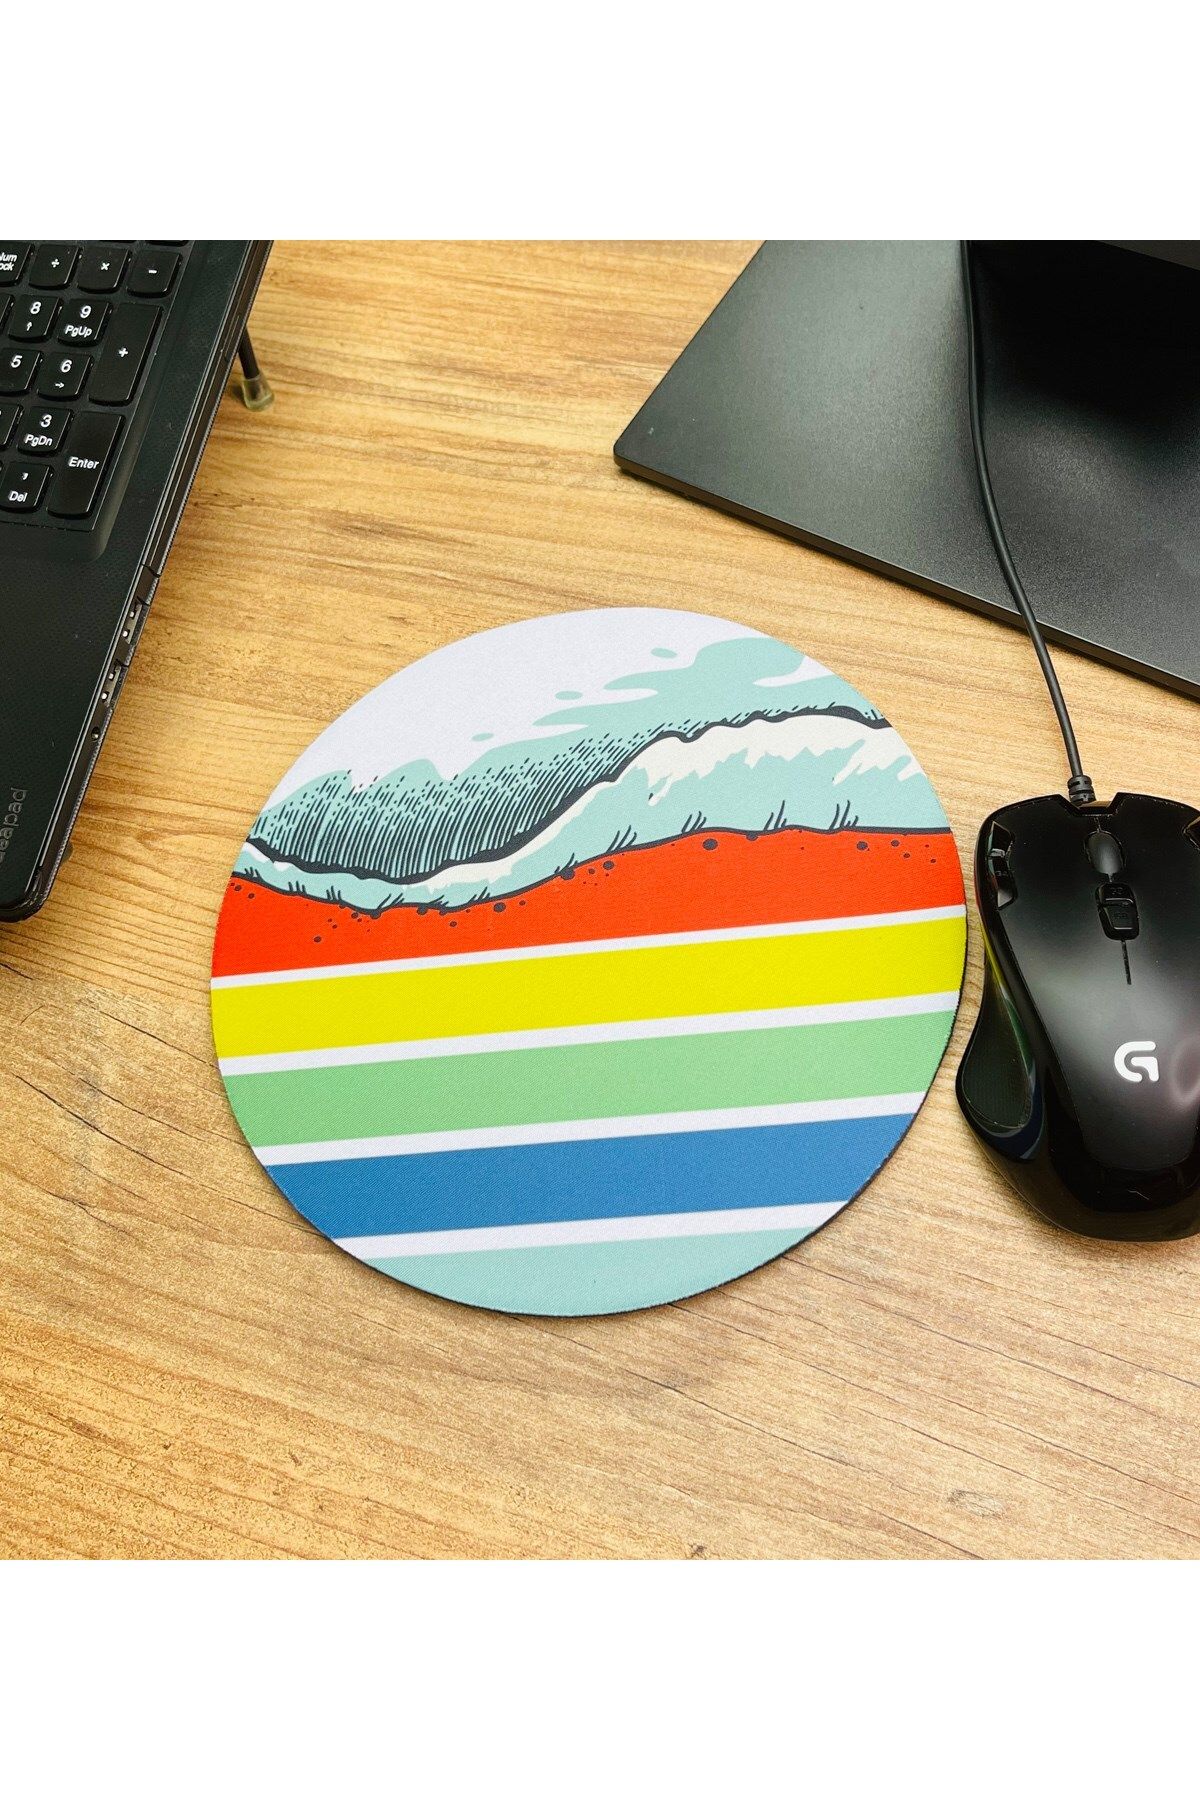 Gift Moda Retro Dalga Tasarımlı Oval Mouse Pad